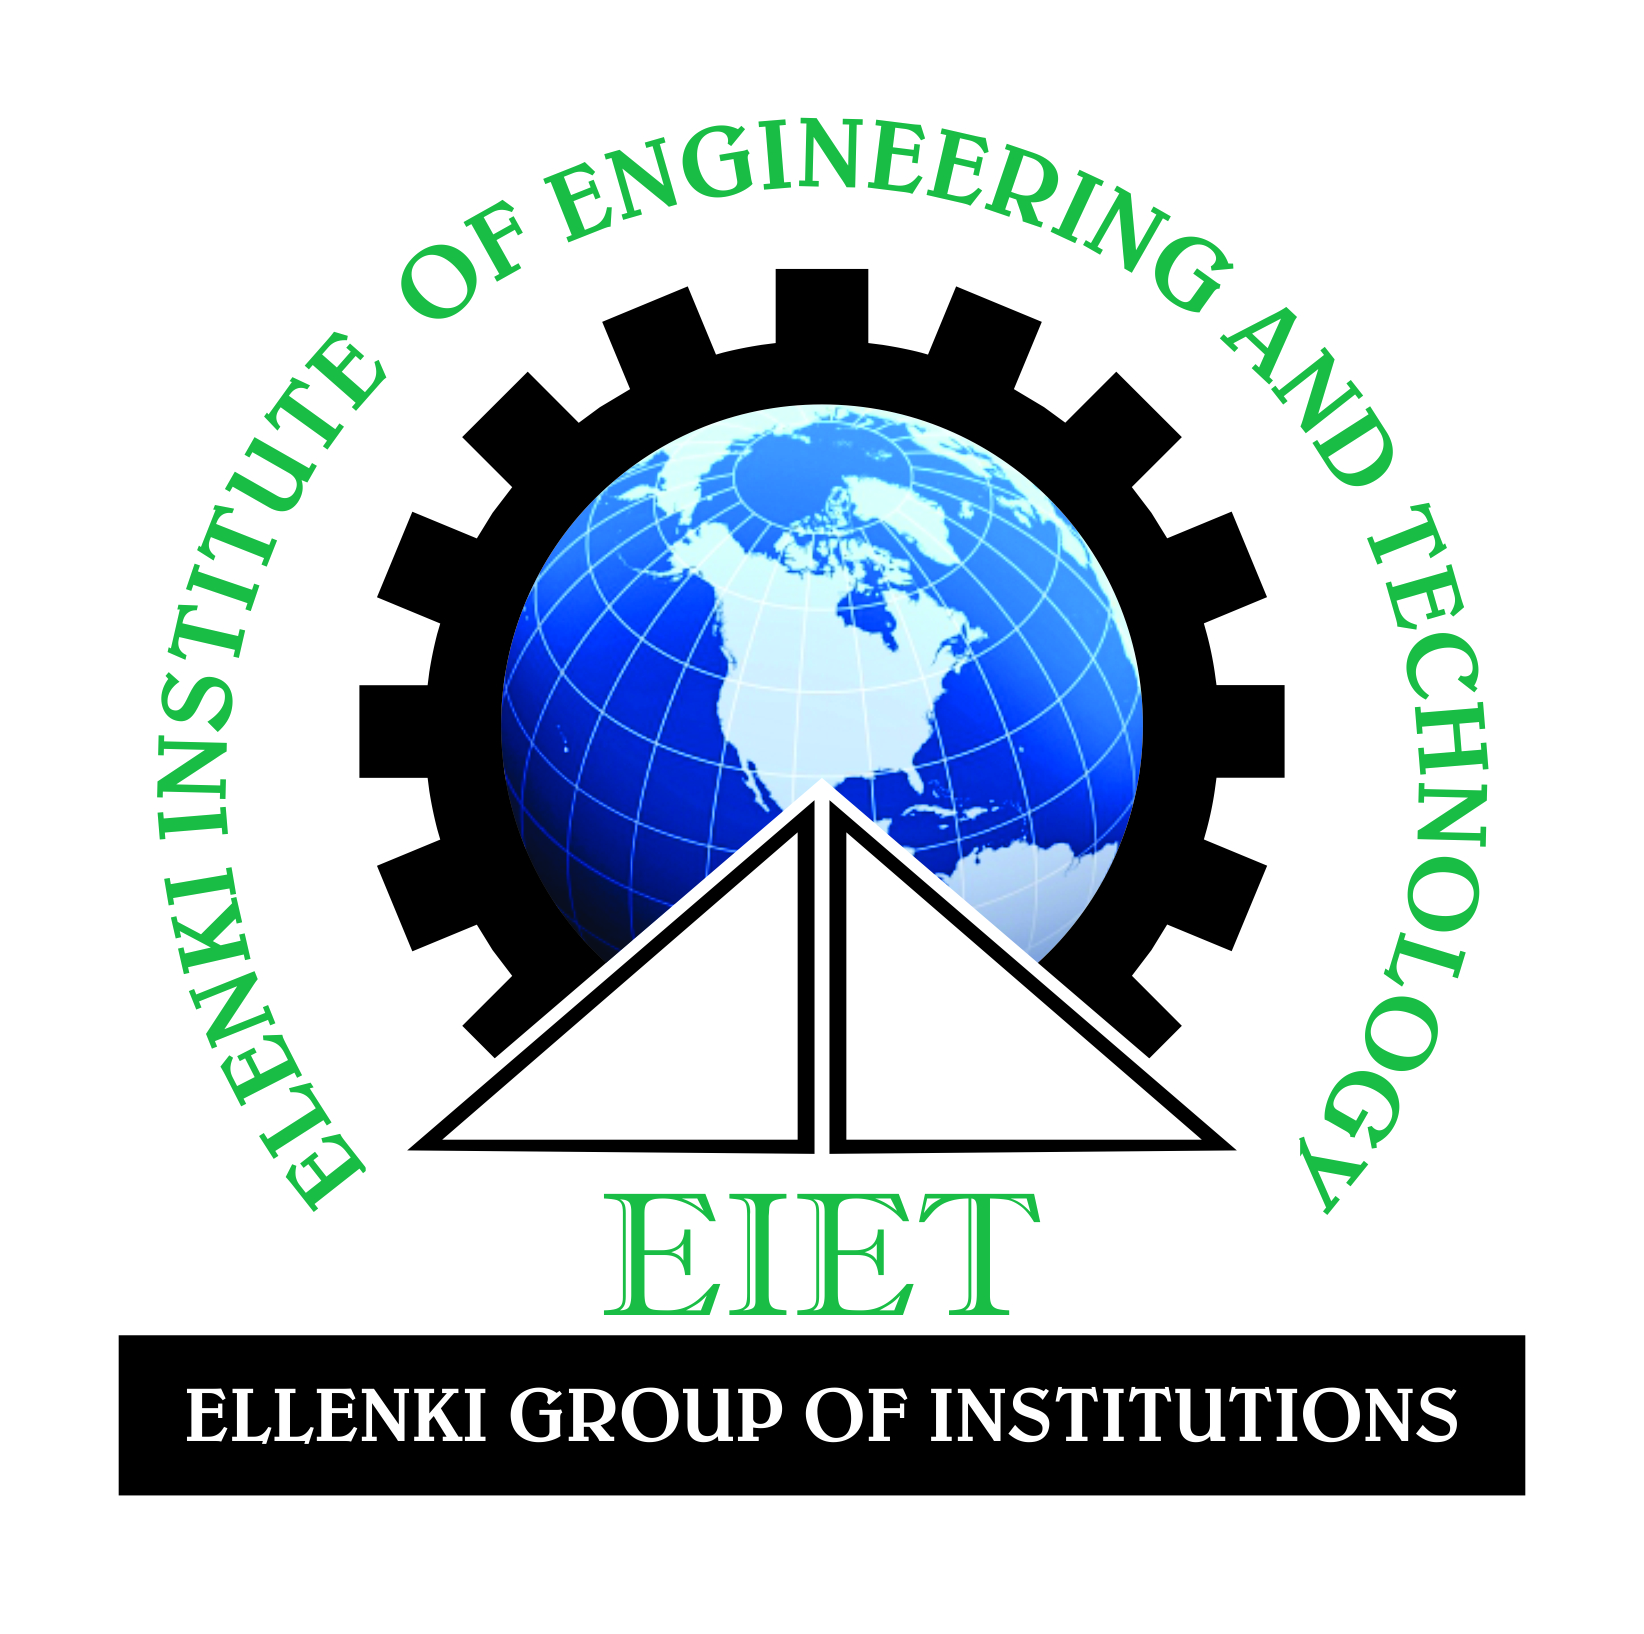 ELLENKI INSTITUTE OF ENGINEERING AND TECHNOLOGY